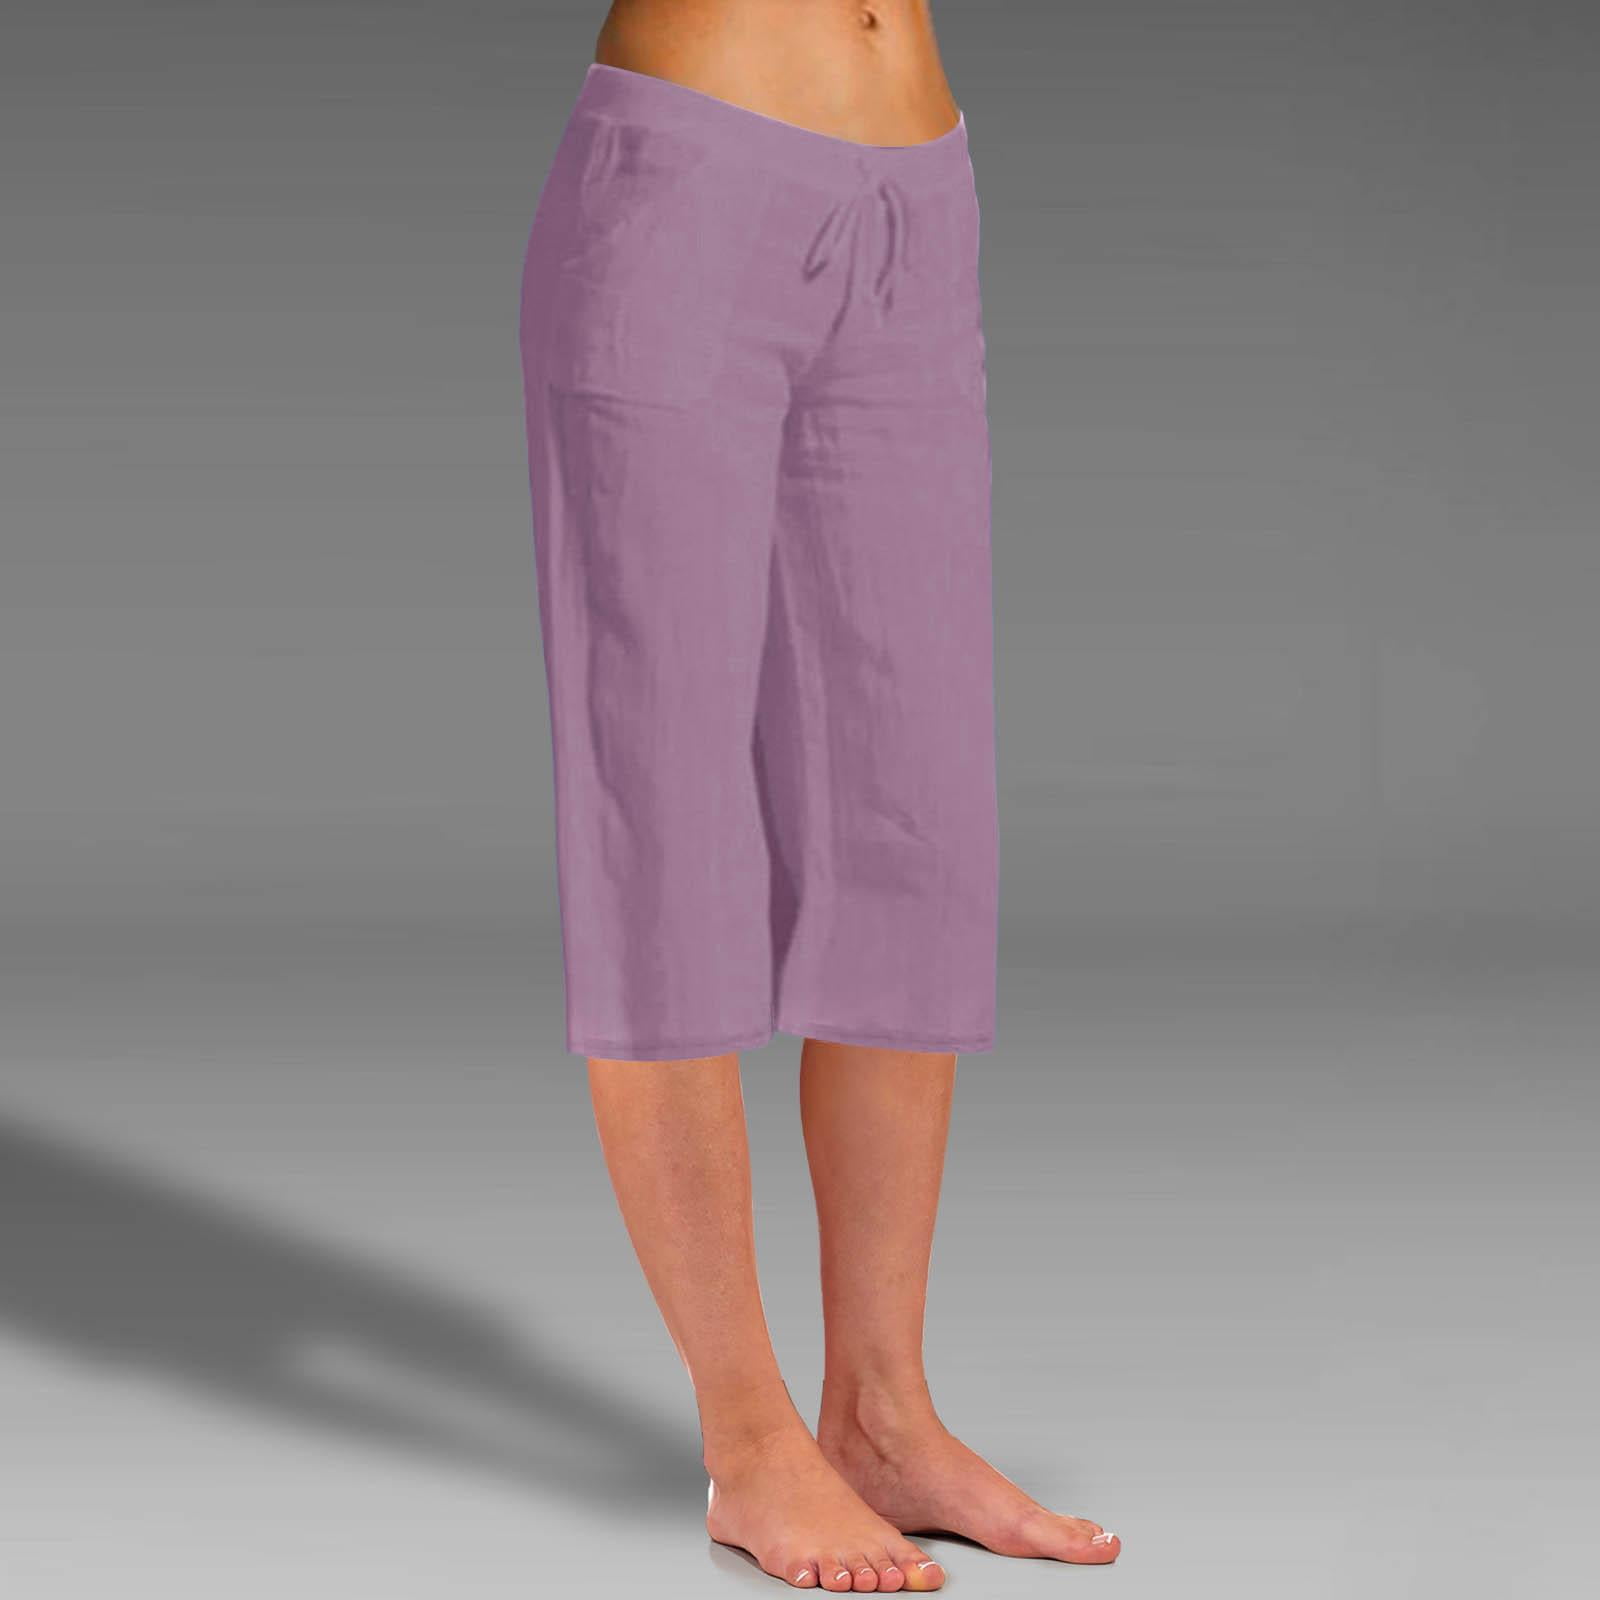 Guzom Capri Pants for Women- Elasticated Waist Casual With Pockets ...